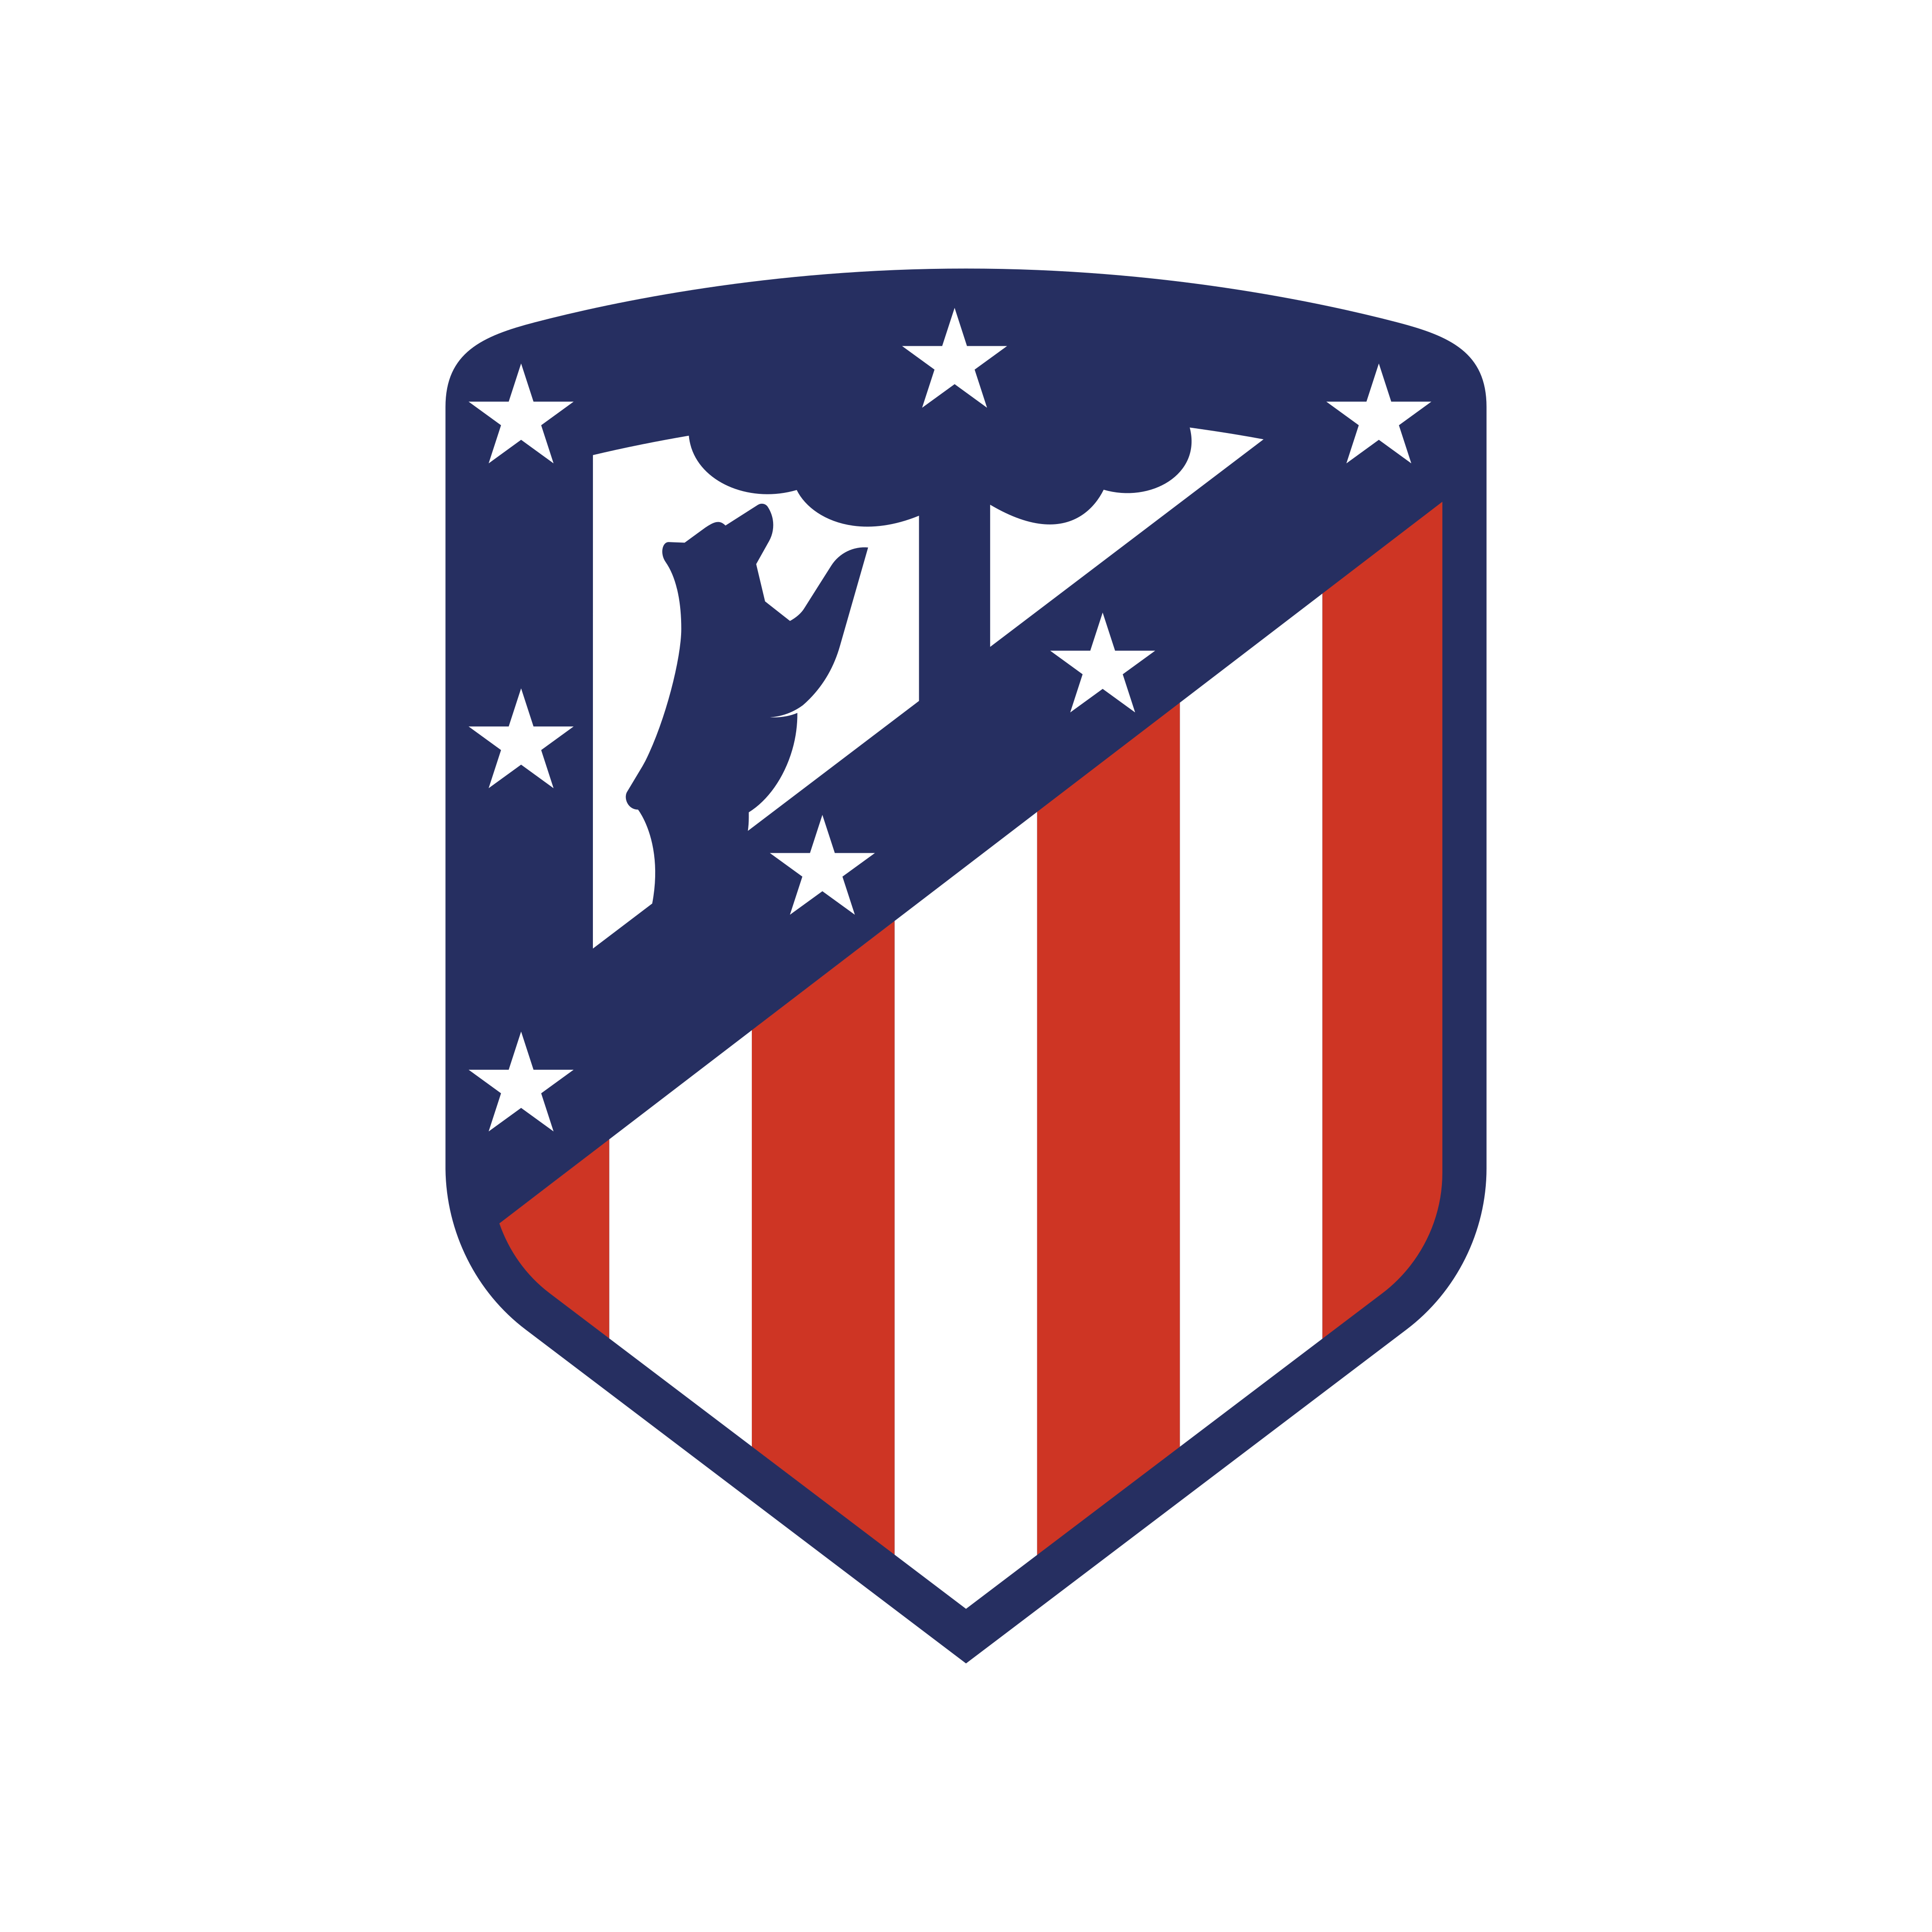 atletico madrid logo 0 - Club Atlético Madrid Logo